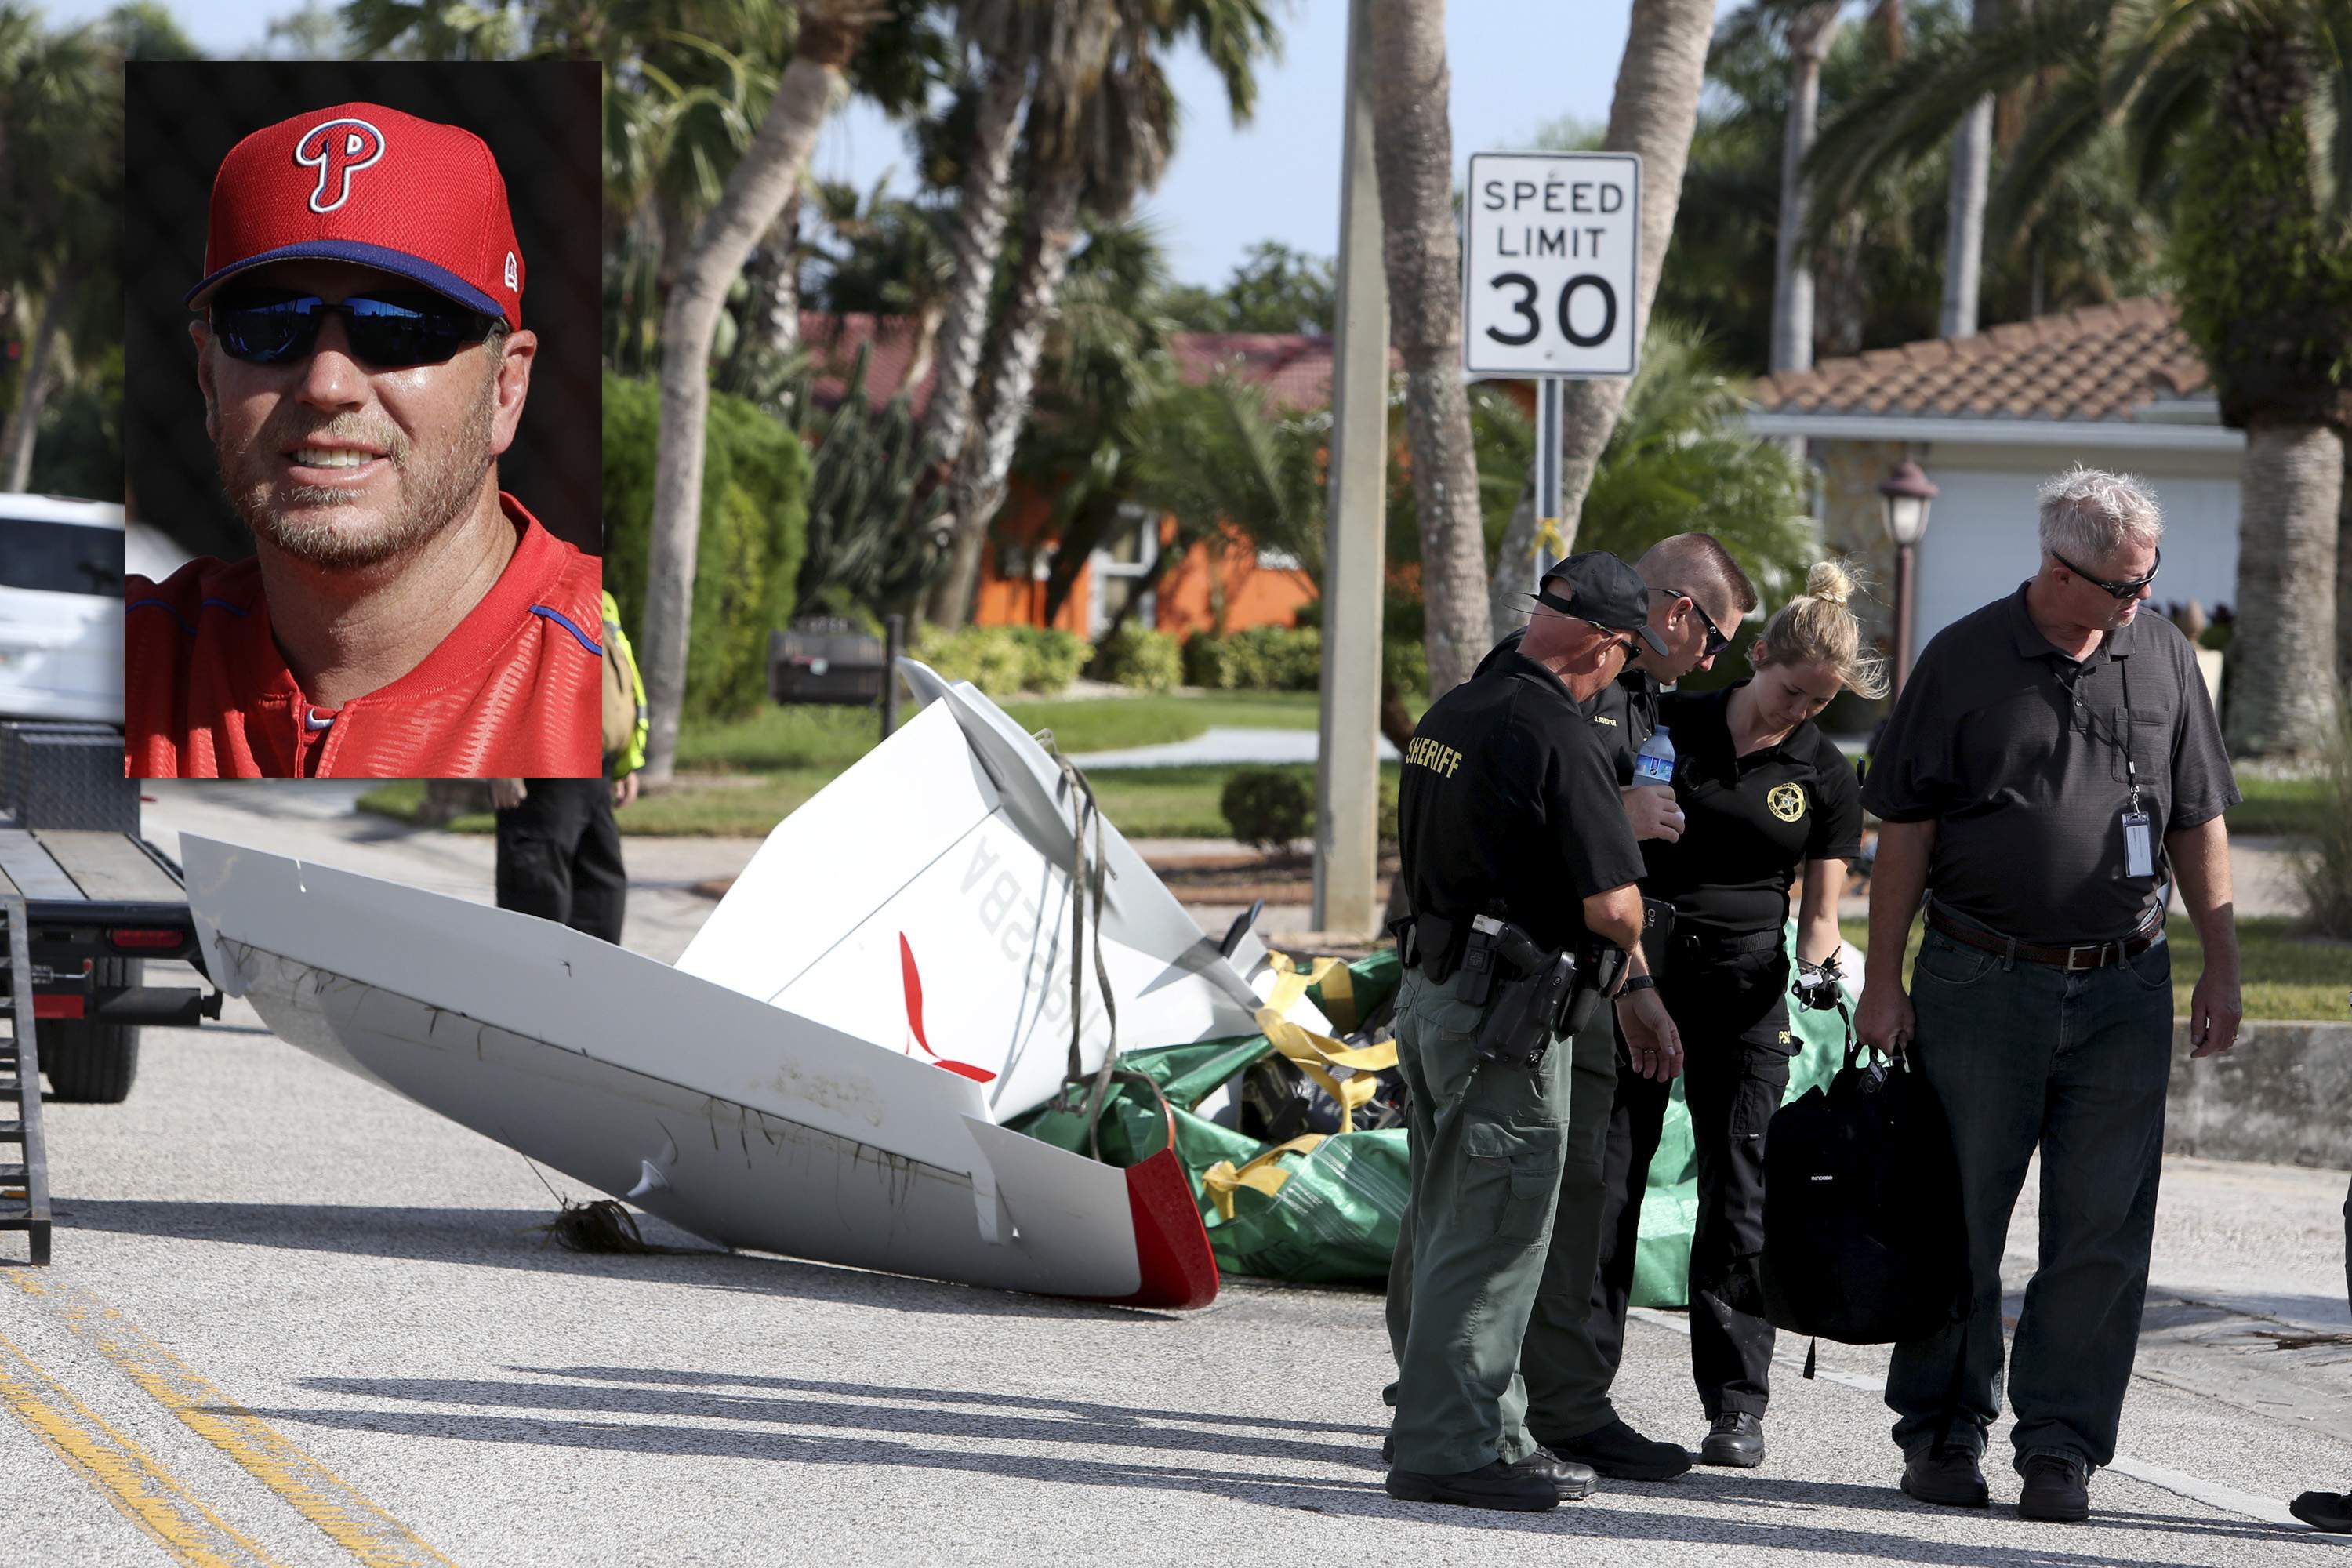 MLB: Roy Halladay 'on drugs, doing stunts' before fatal plane crash